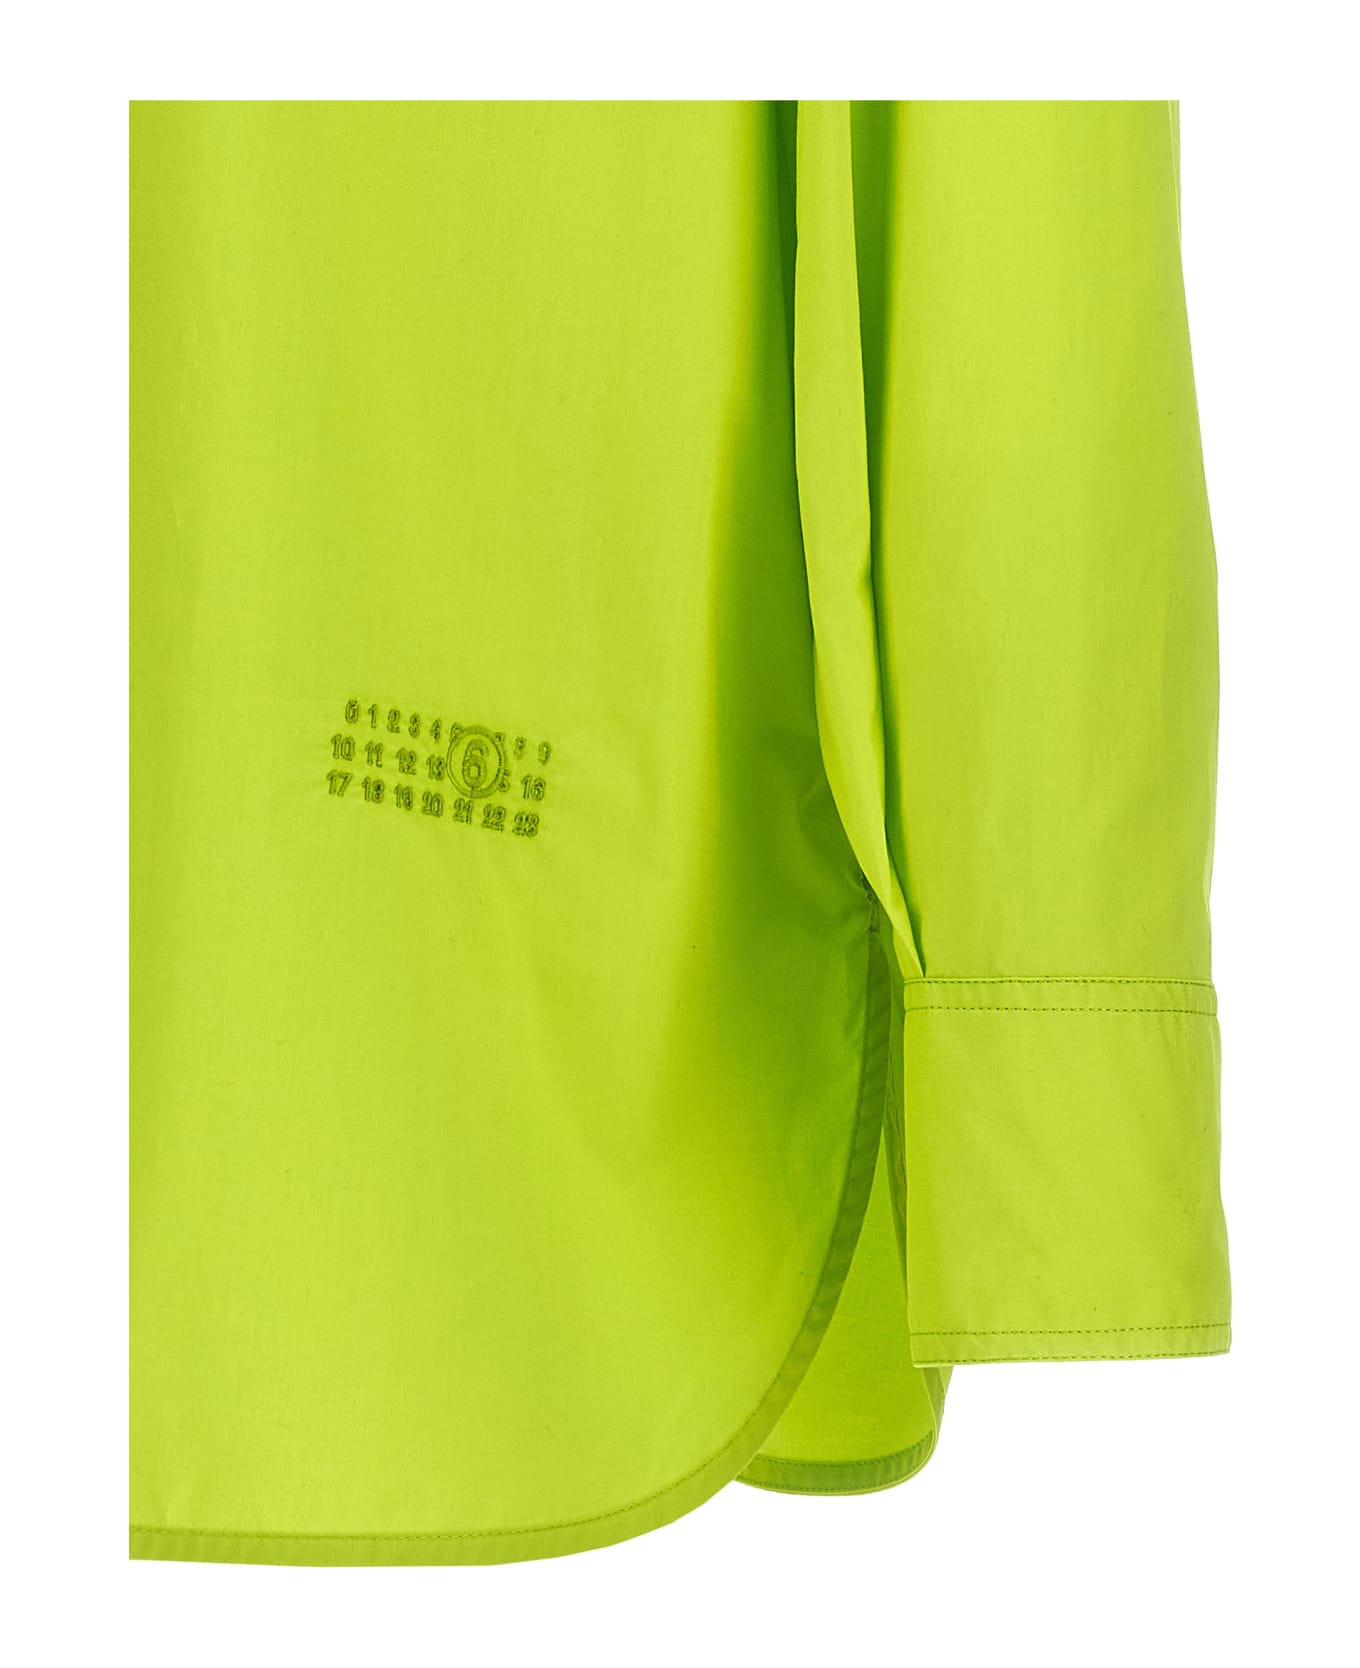 MM6 Maison Margiela 'numeric Signature' Poplin Shirt - Green シャツ